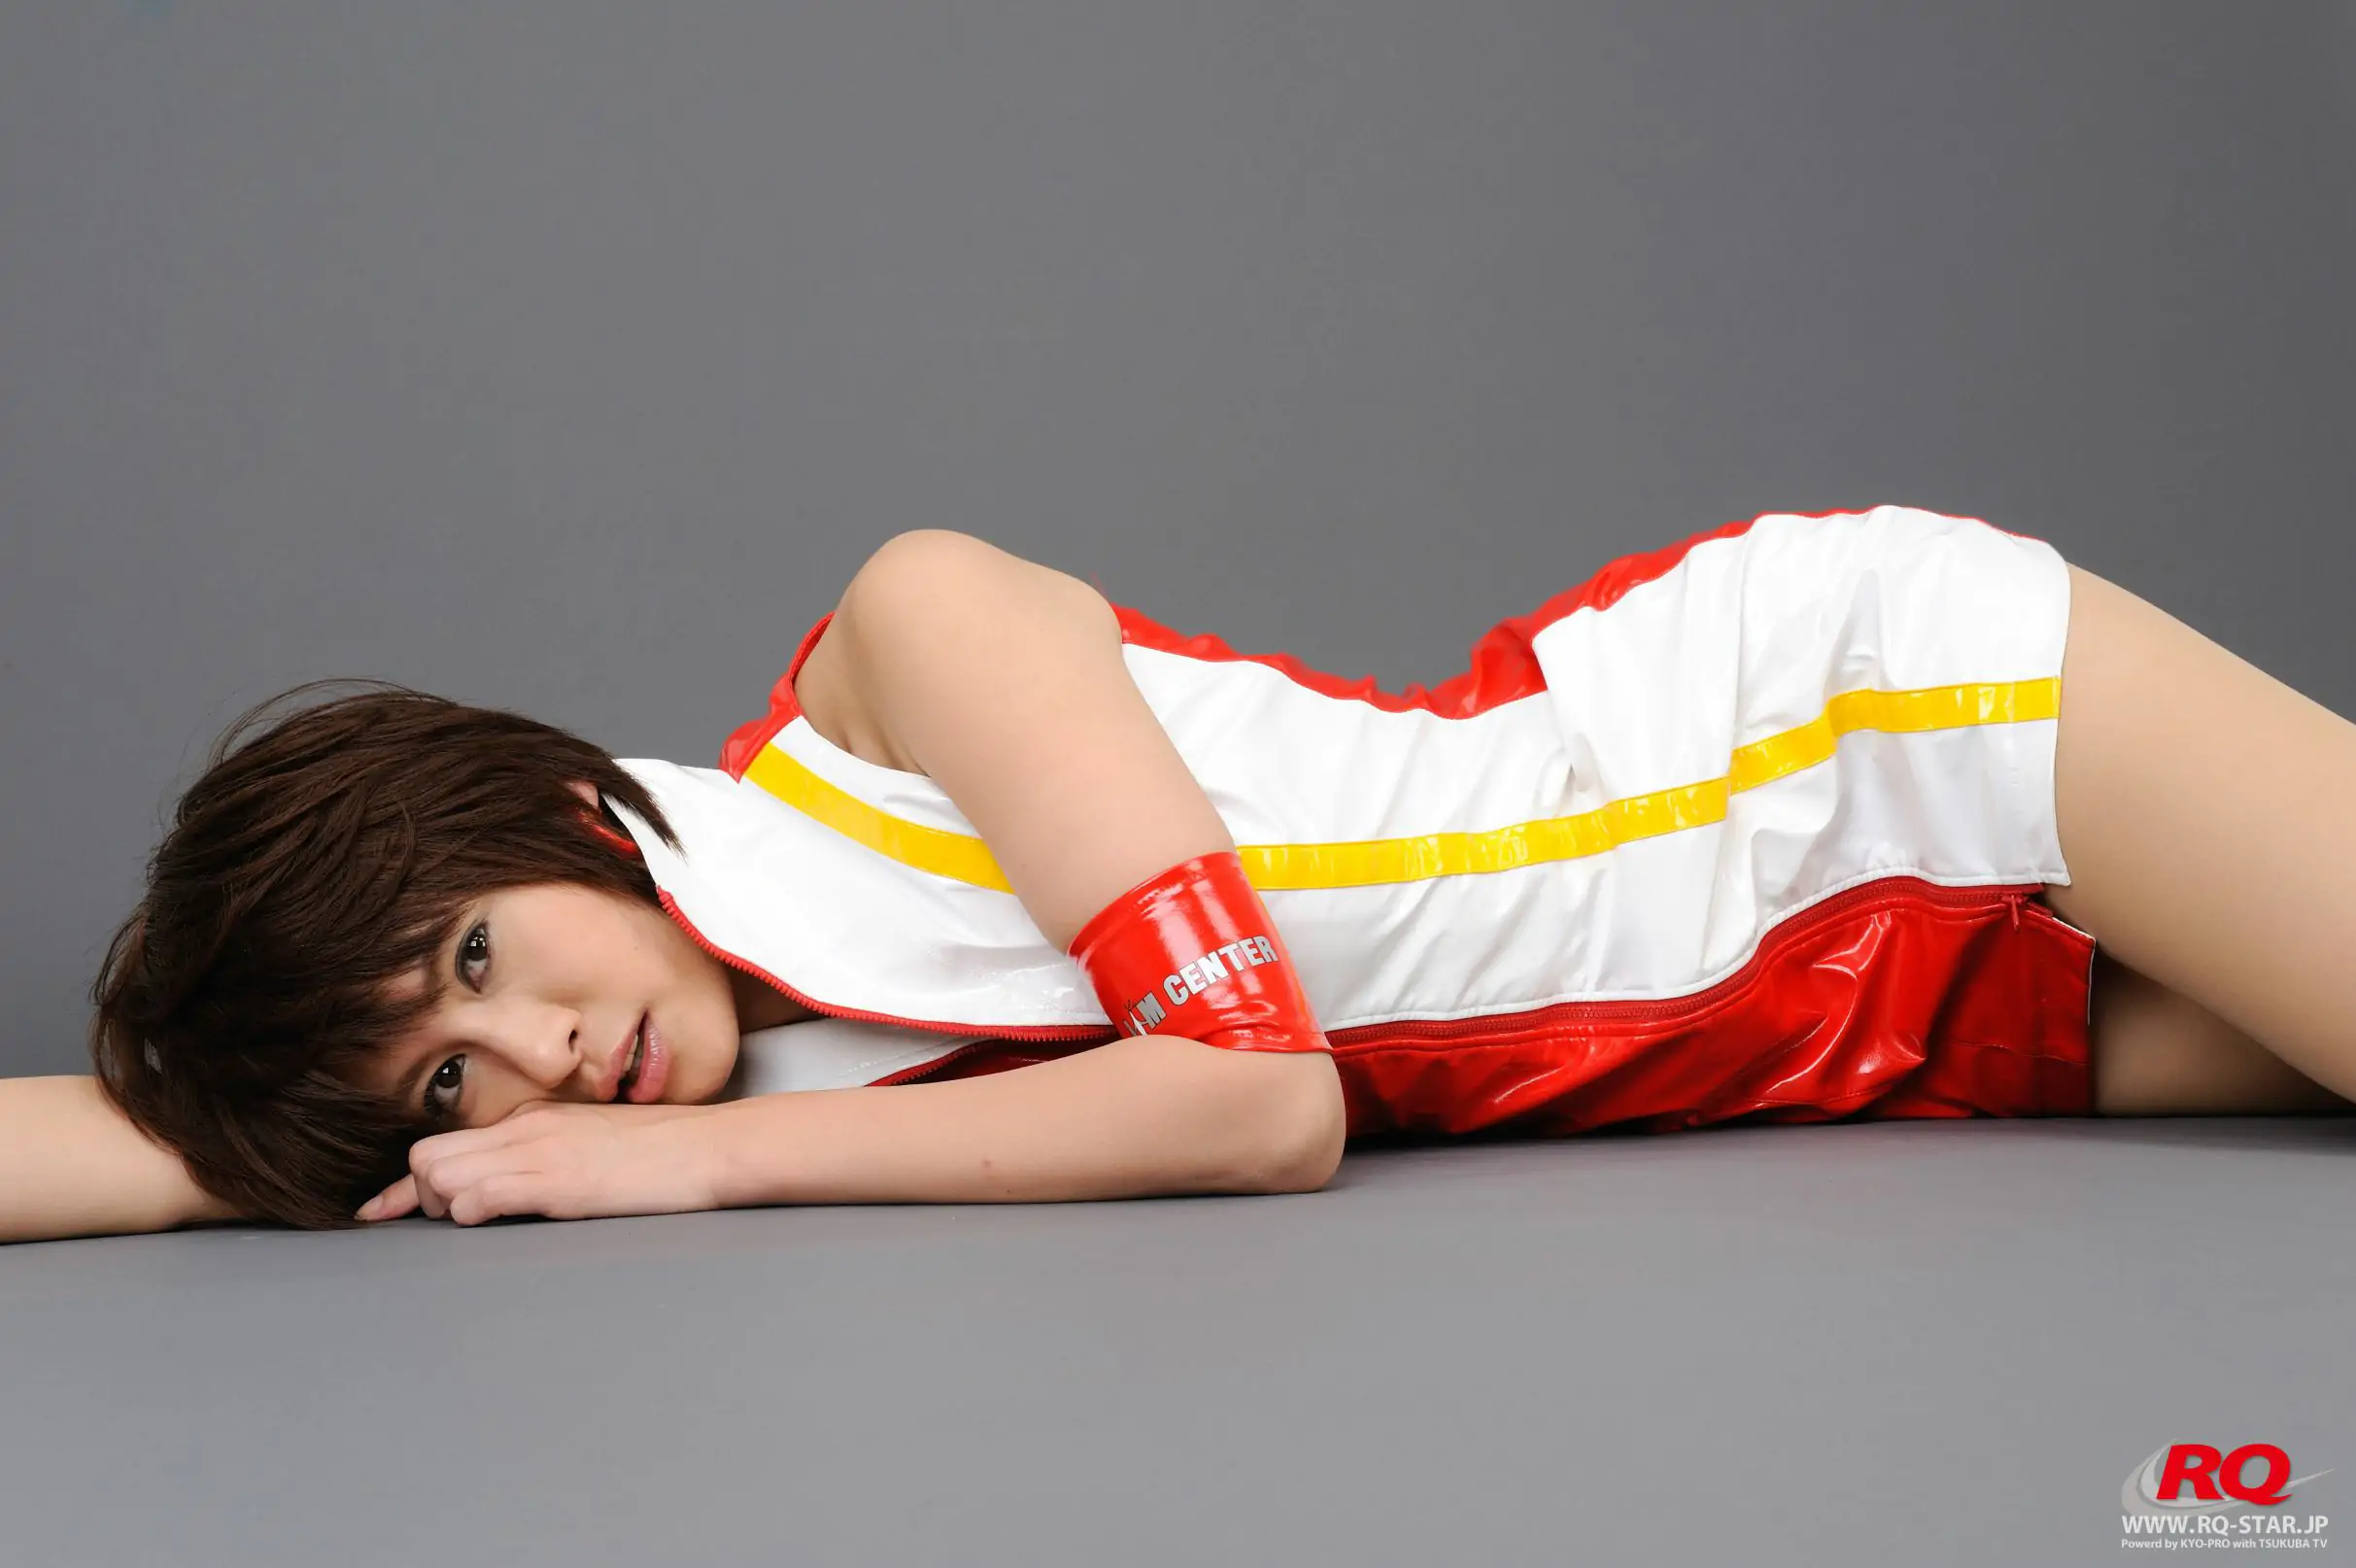 [RQ-STAR] NO.00088 Akiko Fujihara 藤原明子 Race Queen – 2008 Jim Gainer  写真集